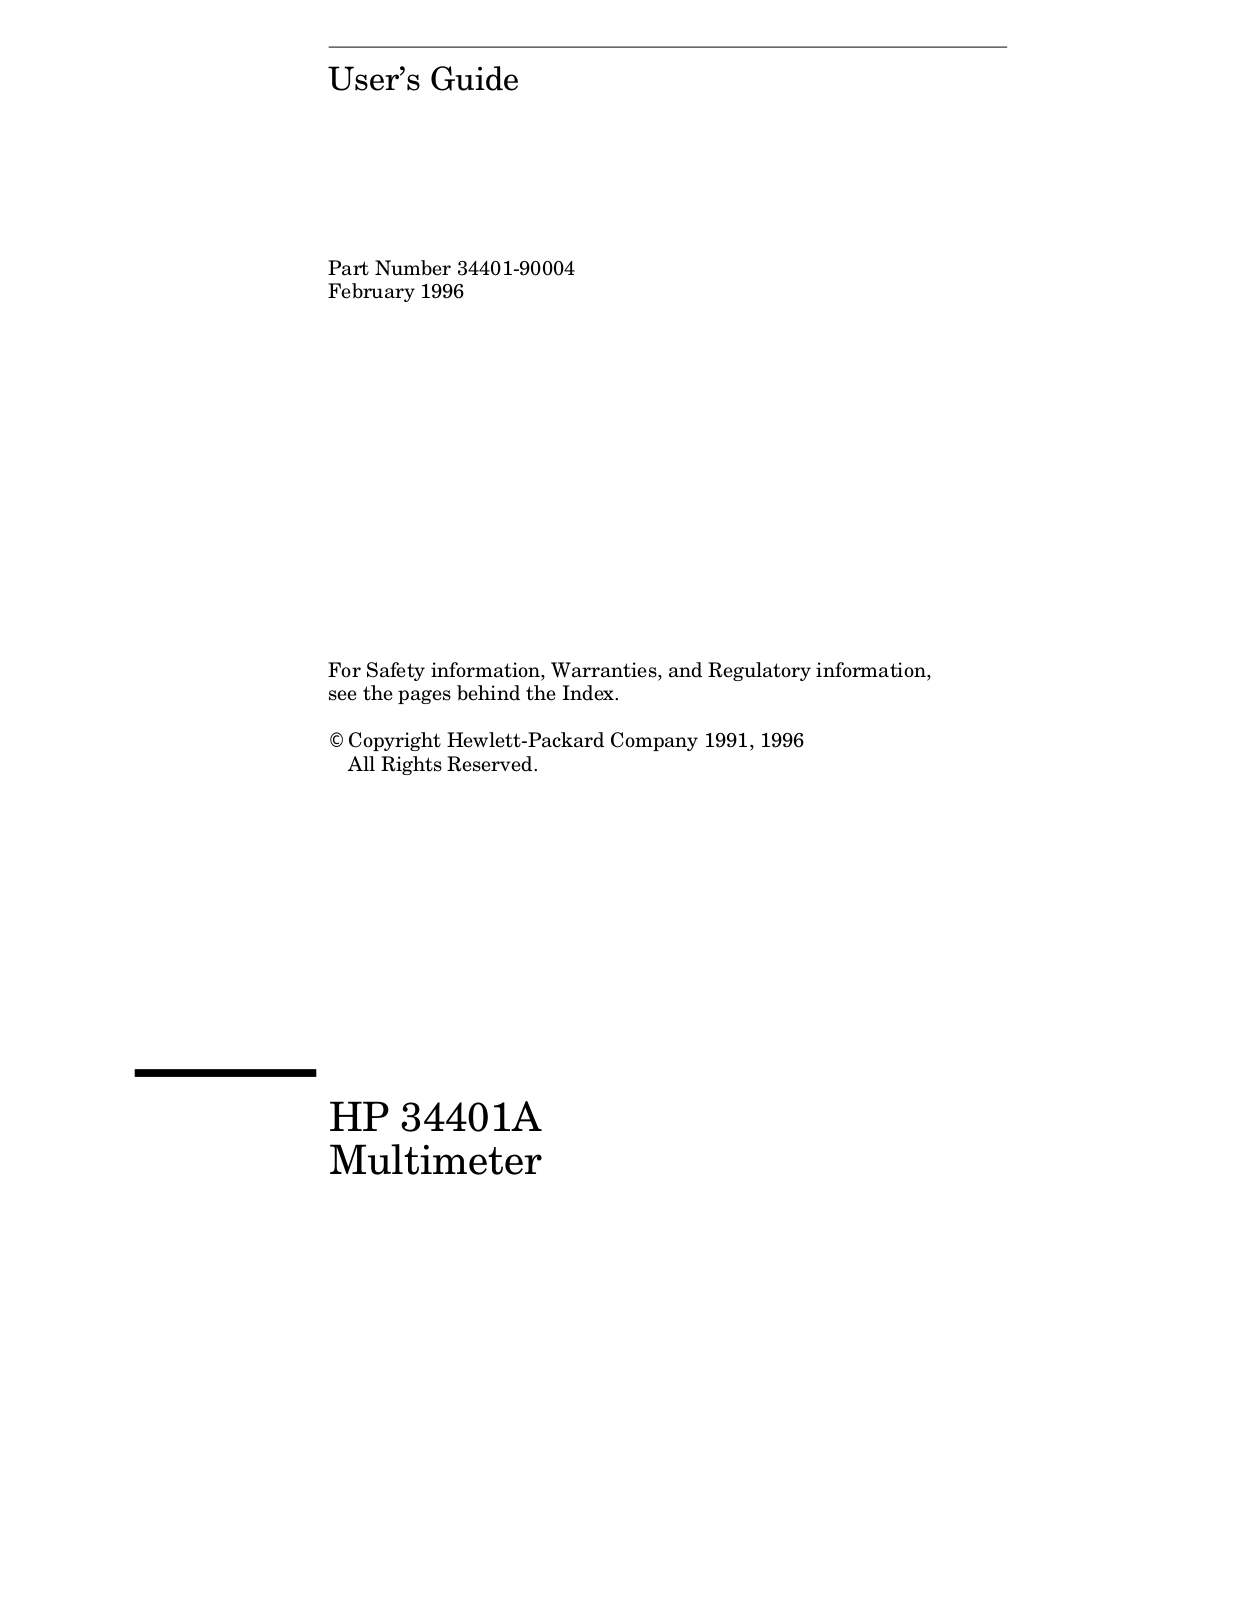 HP 34401A User Manual